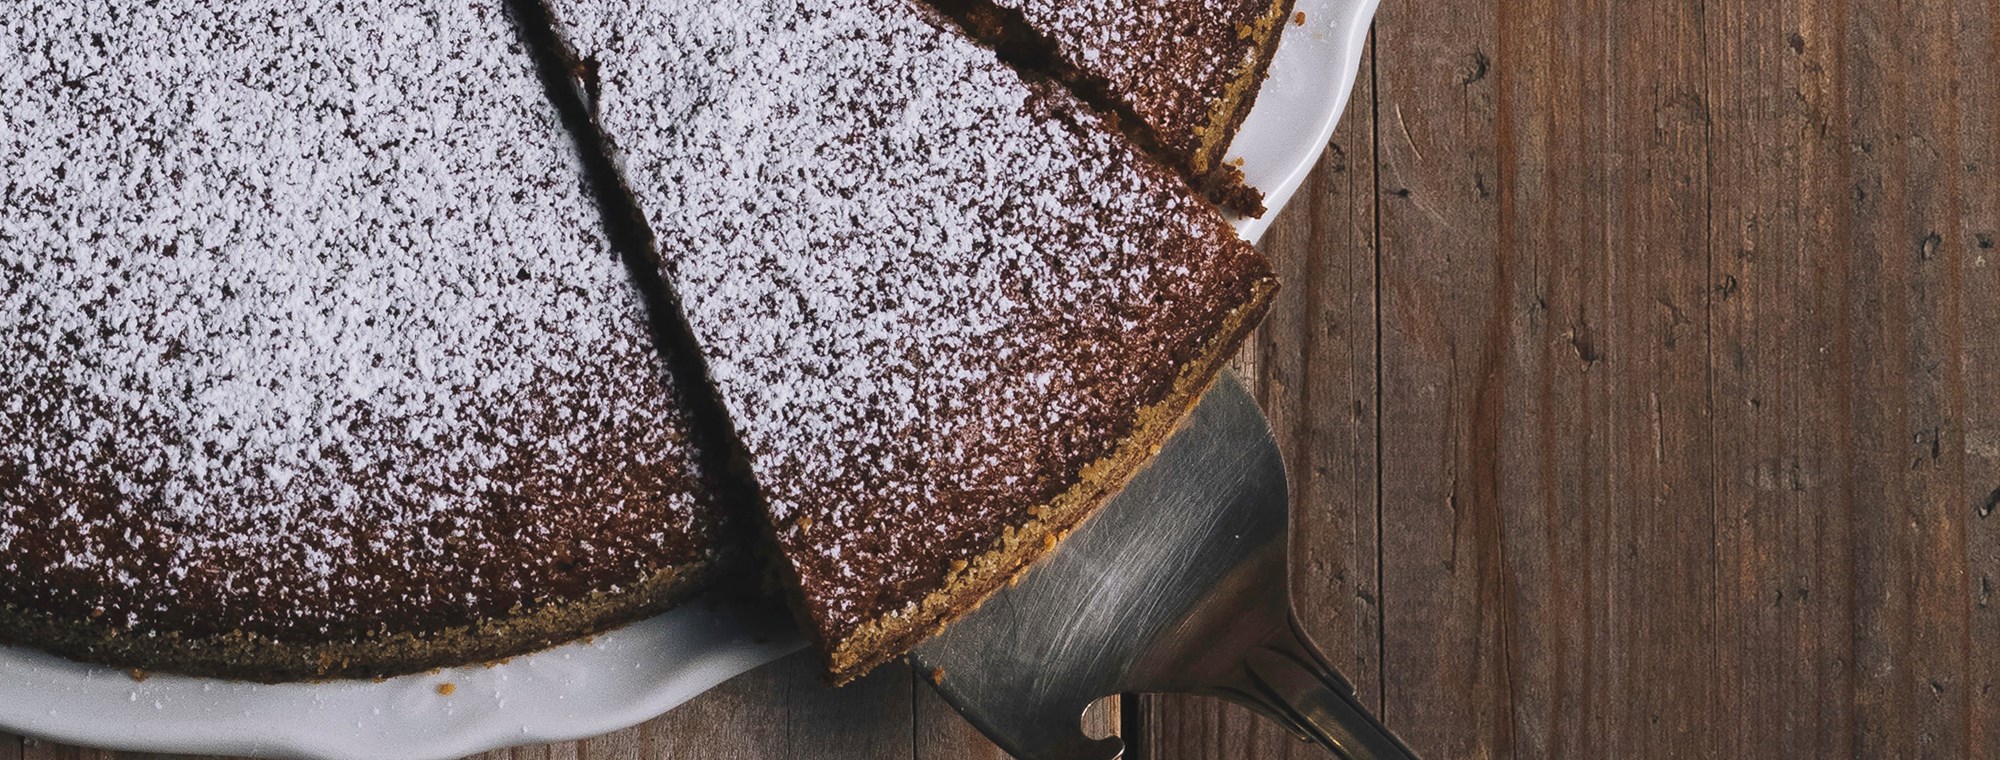 Recipe Expert Spanish Almond Cake Powdered Sugar Serving Pie Table Wood